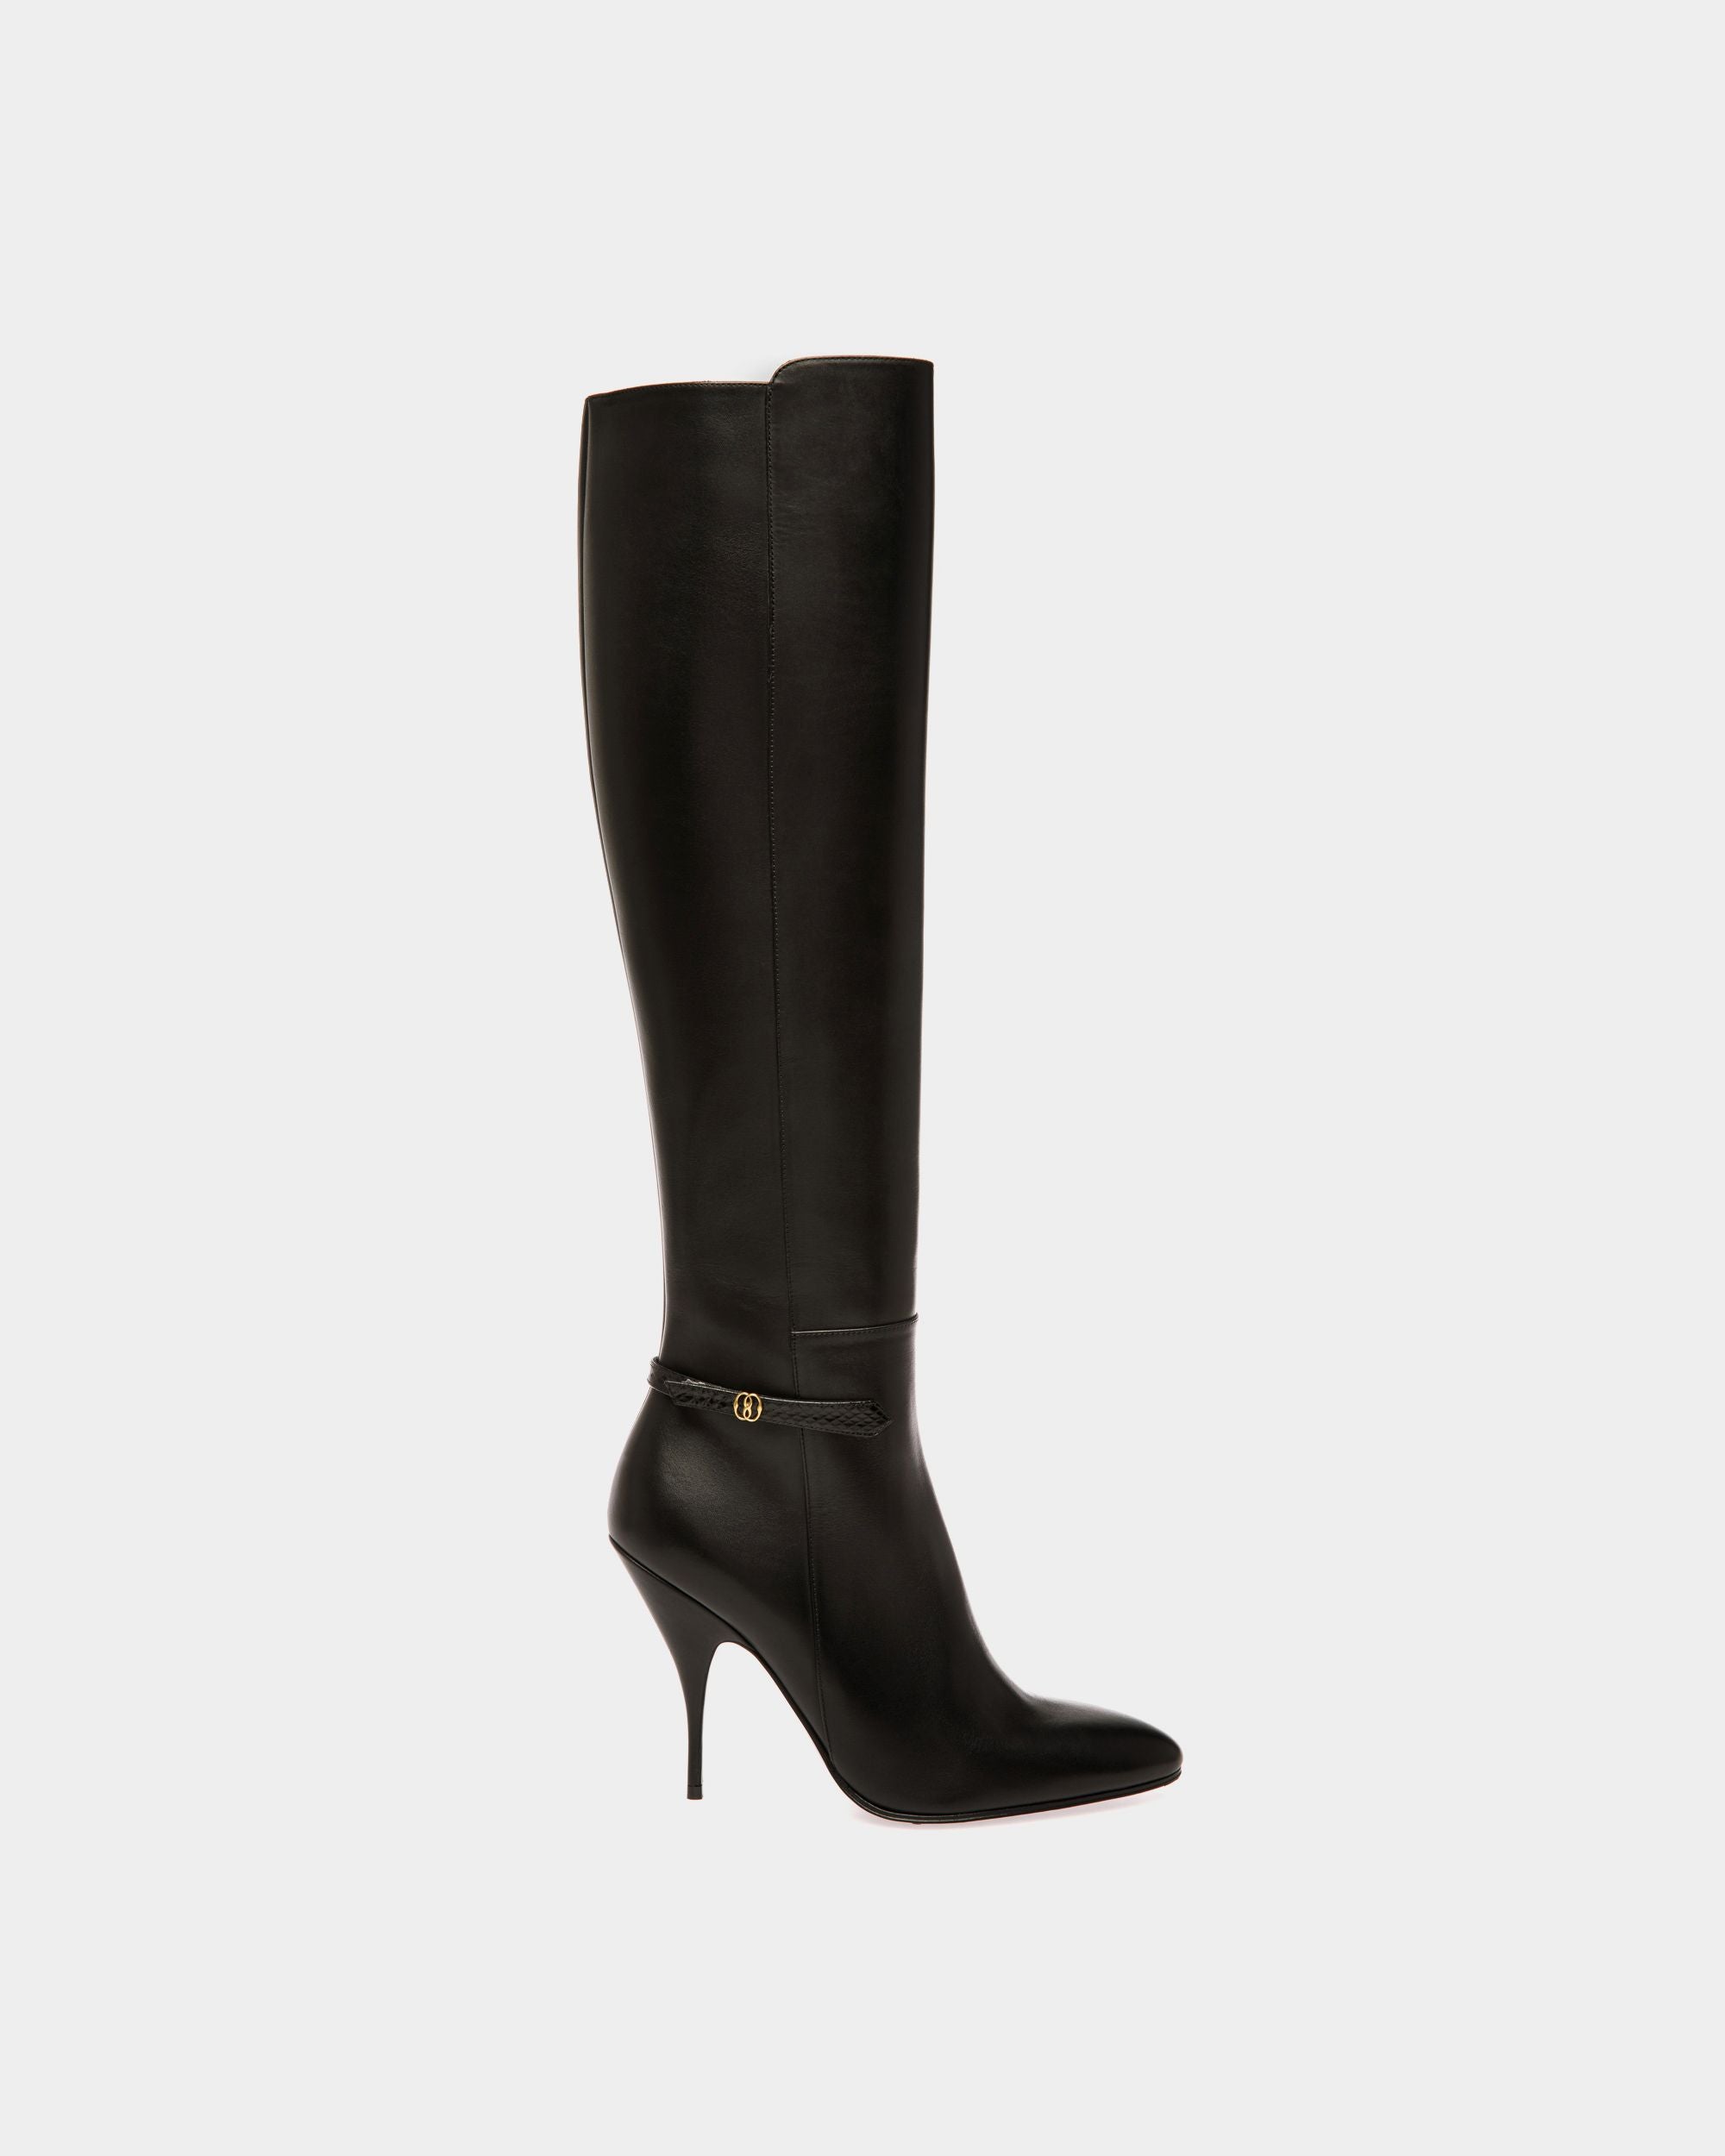 Paulina | Women's Boots | Black Leather | Bally | Still Life Side